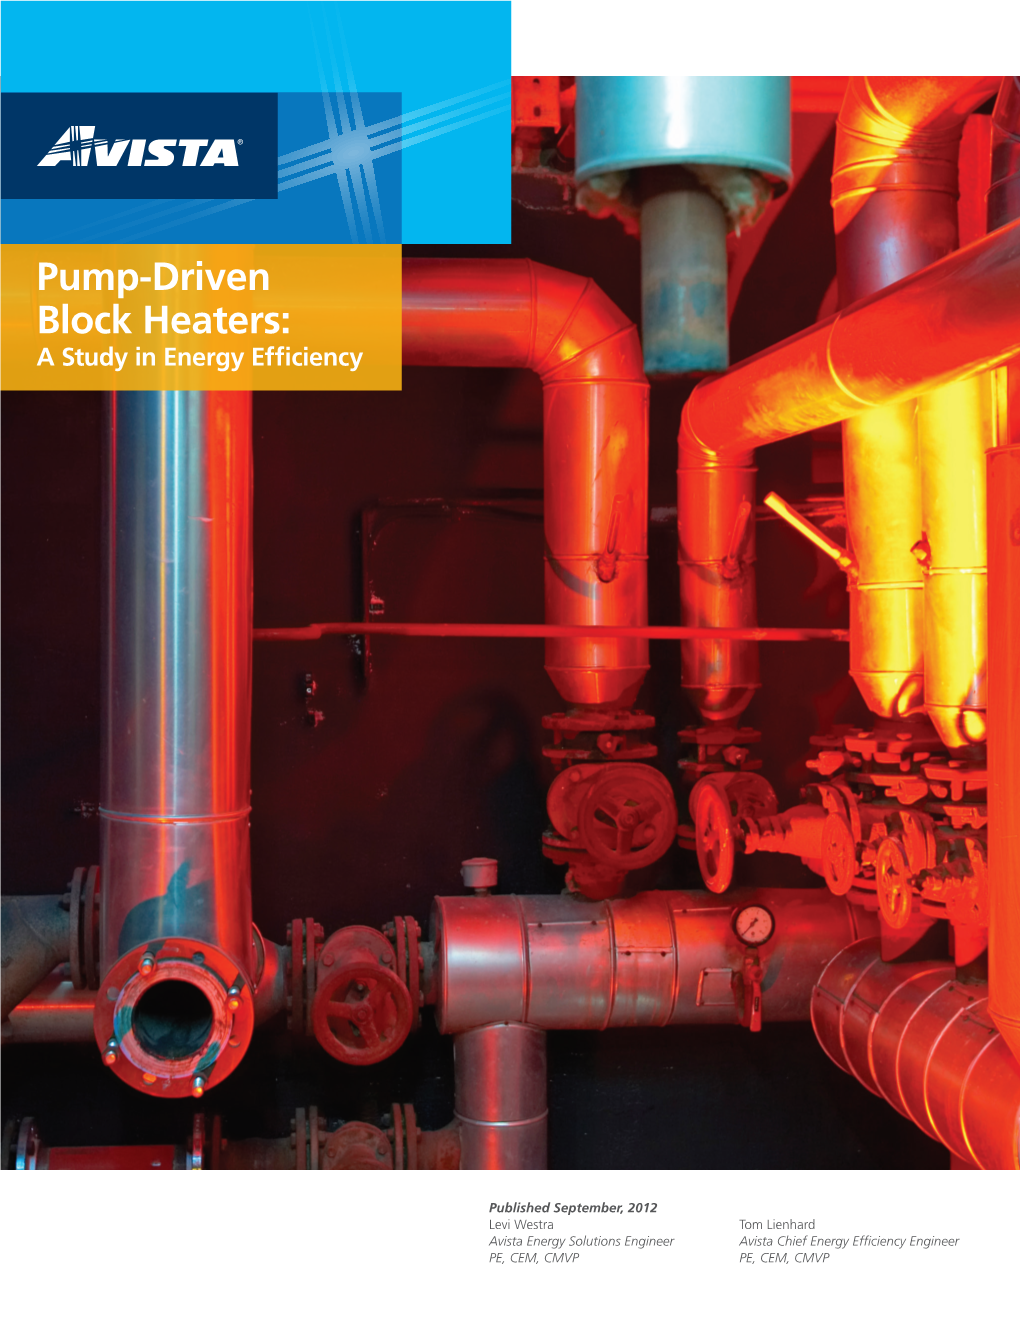 Pump-Driven Block Heaters: a Study in Energy Efficiency